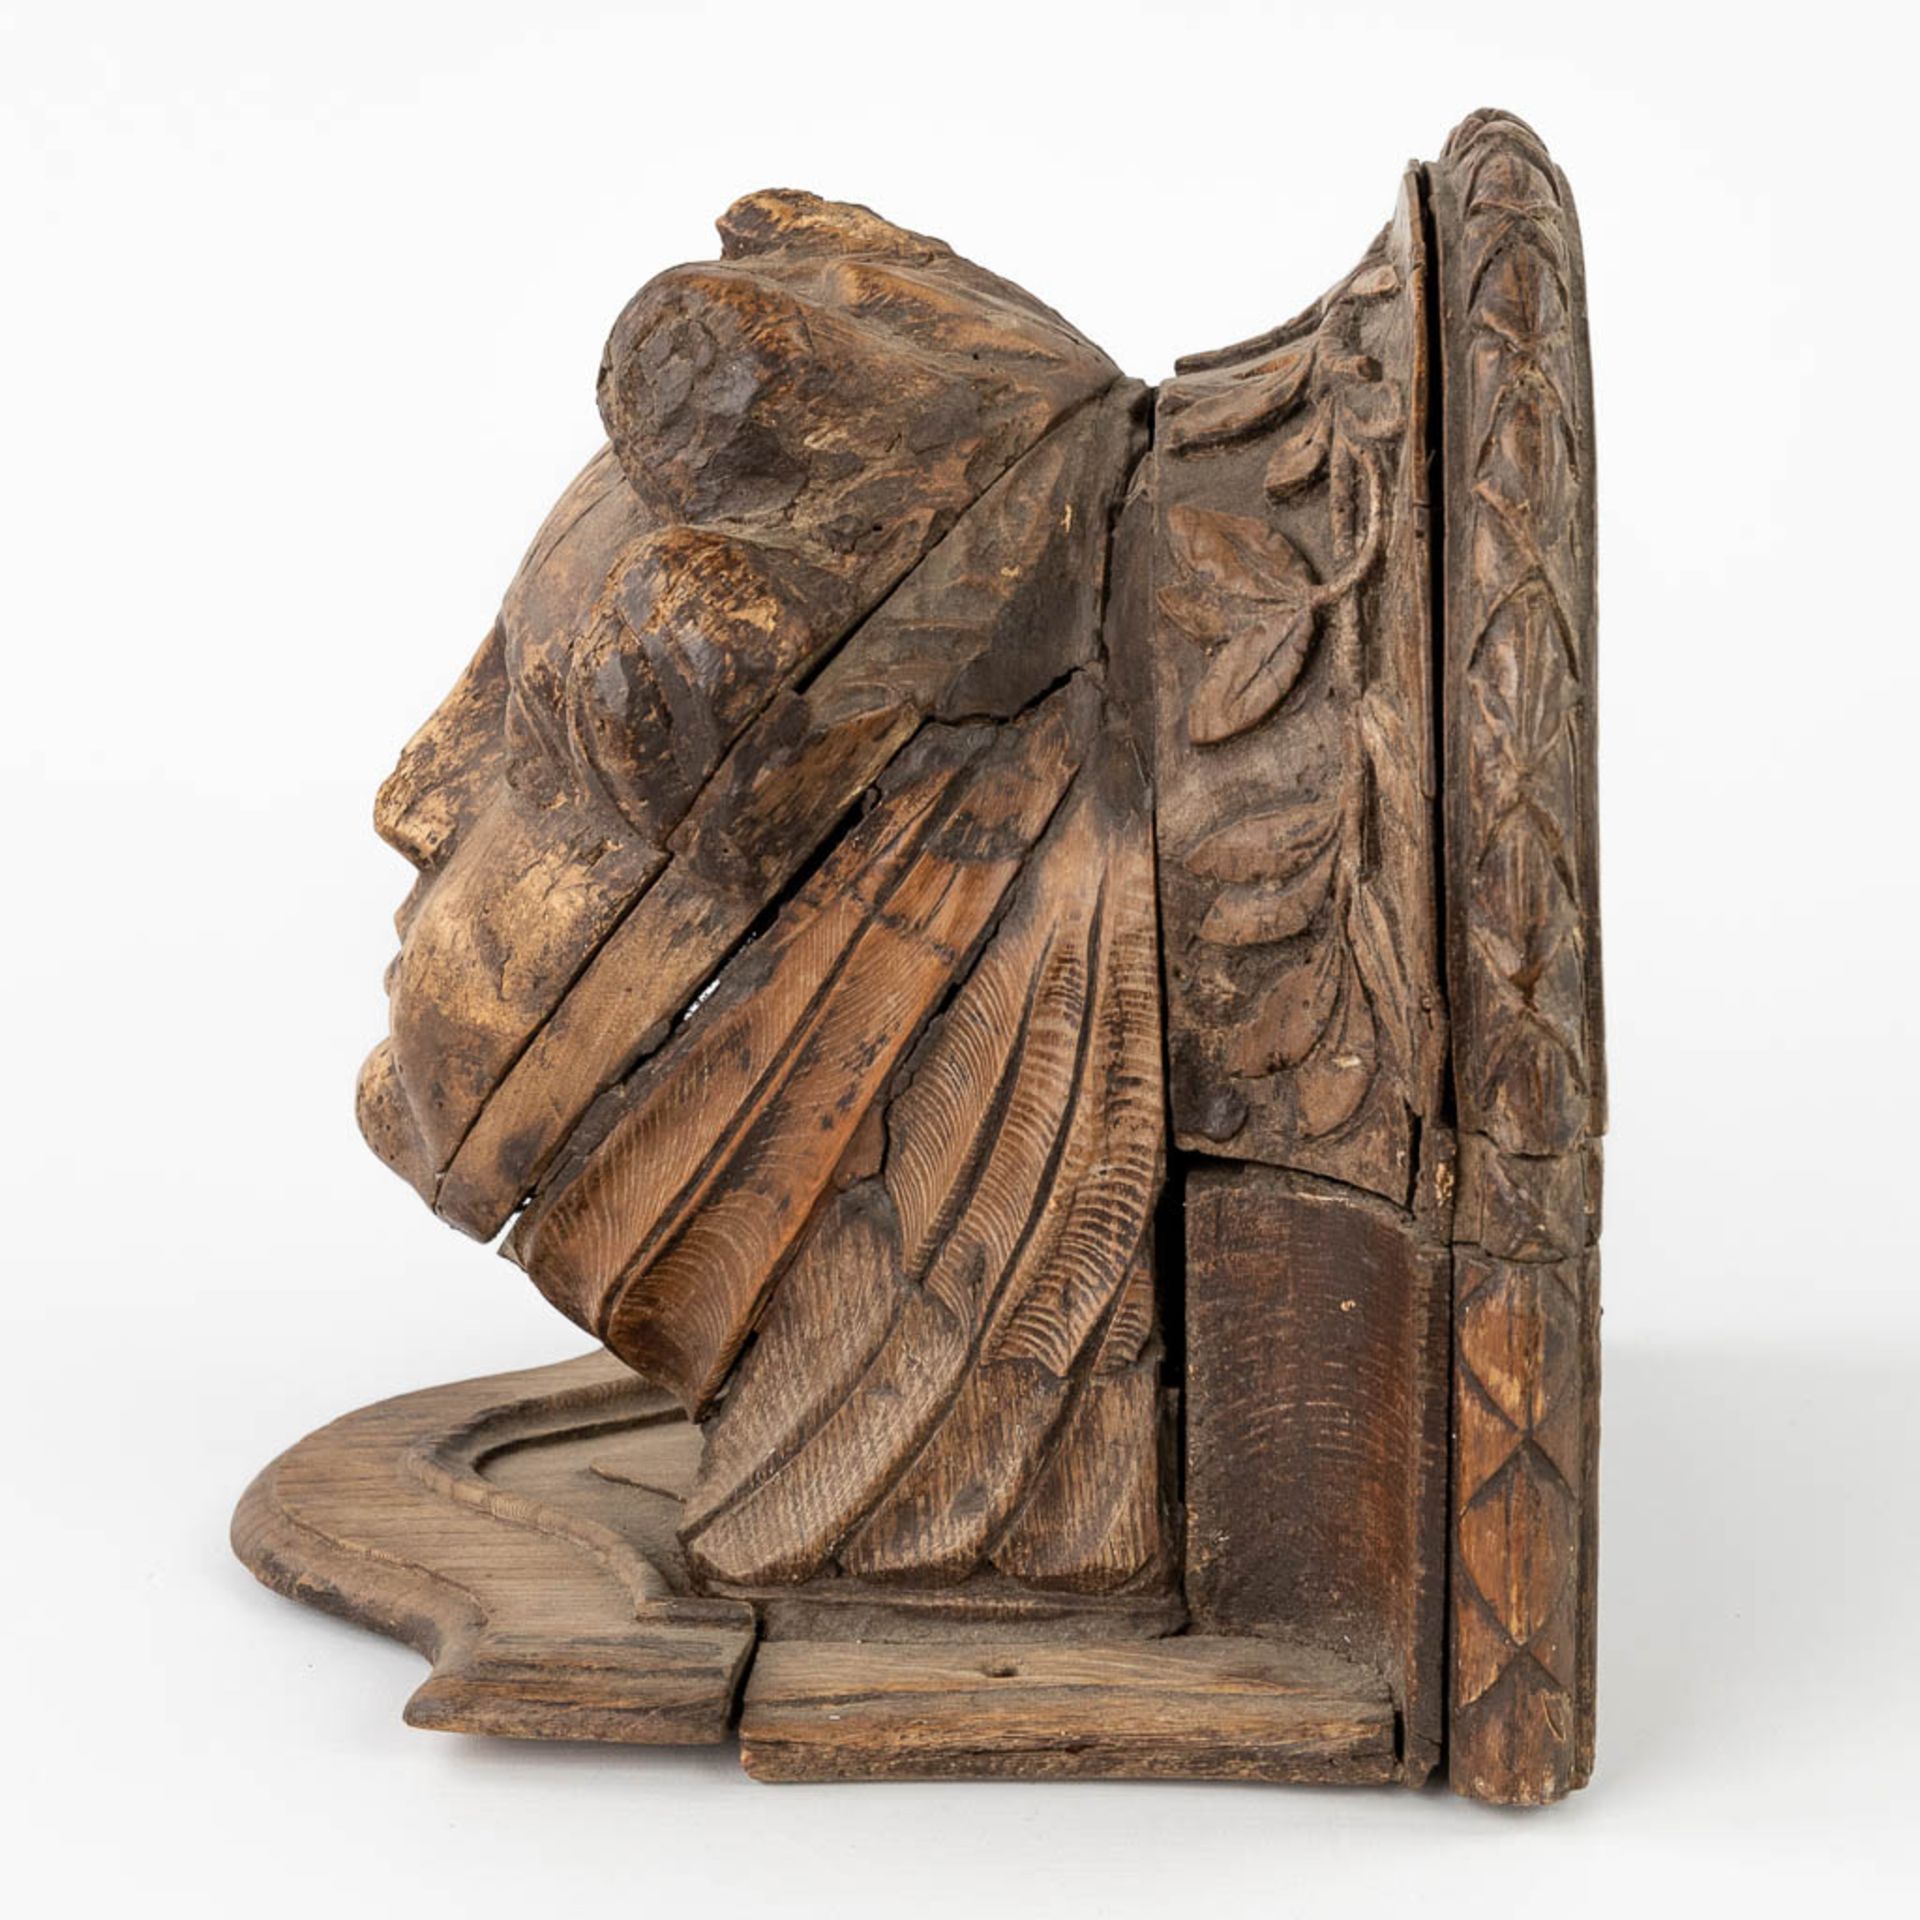 An antique, wood-sculptured corbel with an angel figurine. Oak, 17thC. (L:30 x W:28 x H:27 cm) - Bild 4 aus 11